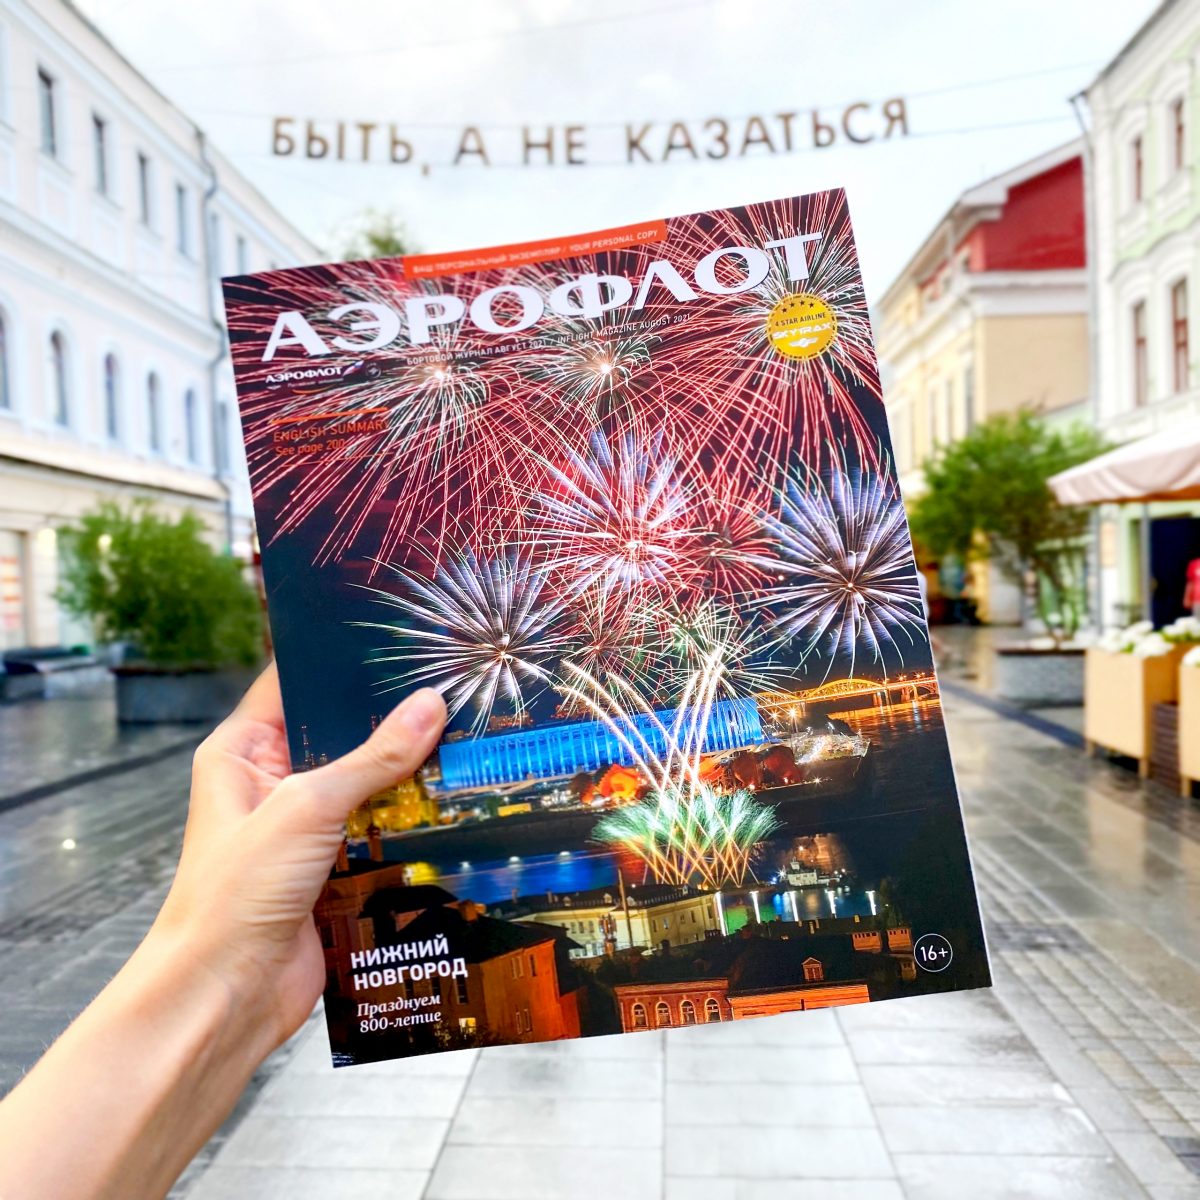 Нижний Новгород попал на обложку бортового журнала «Аэрофлот»